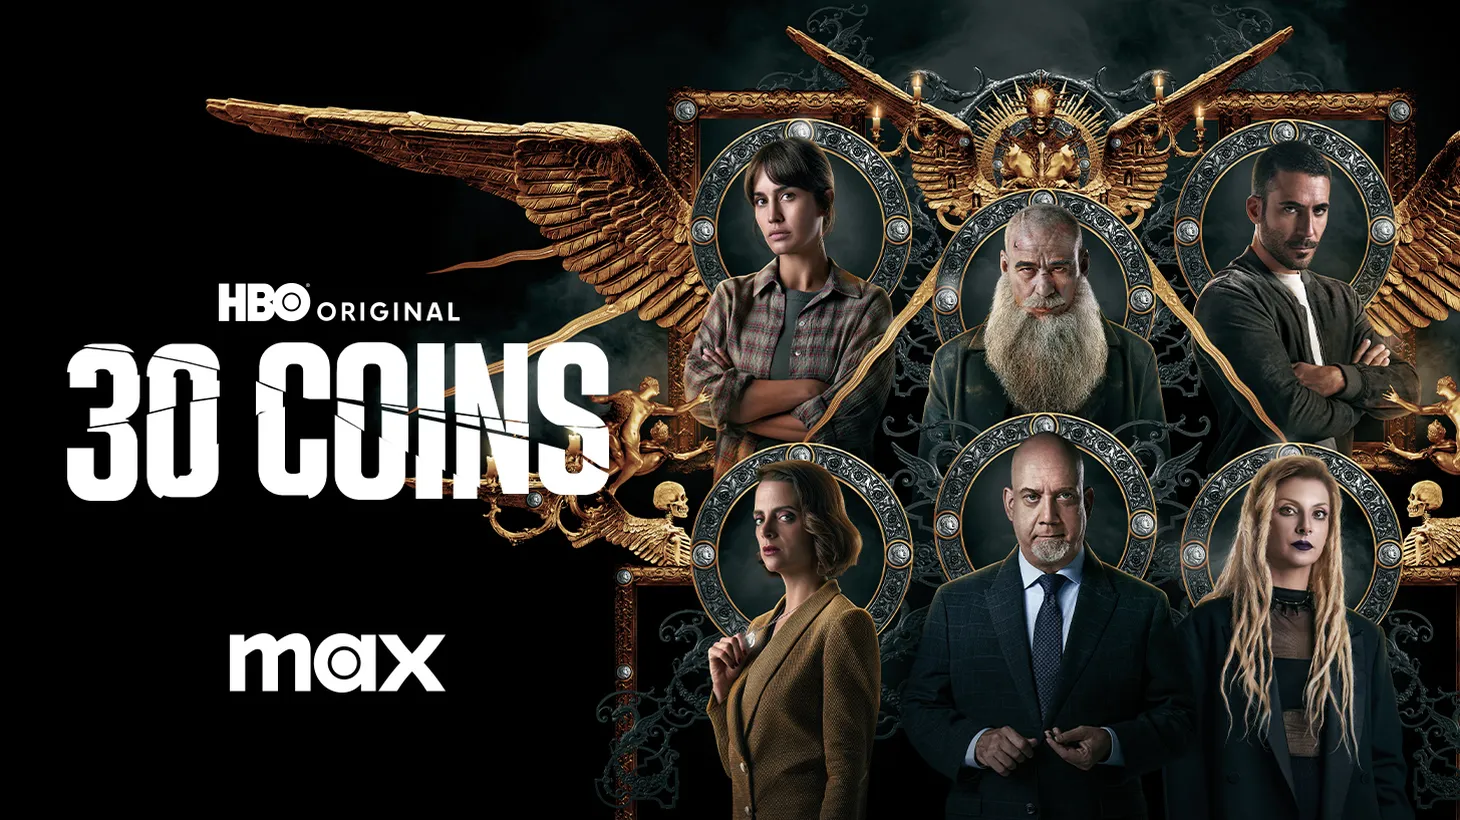 30 Coins” Season Two - HBO Original Series Trailer